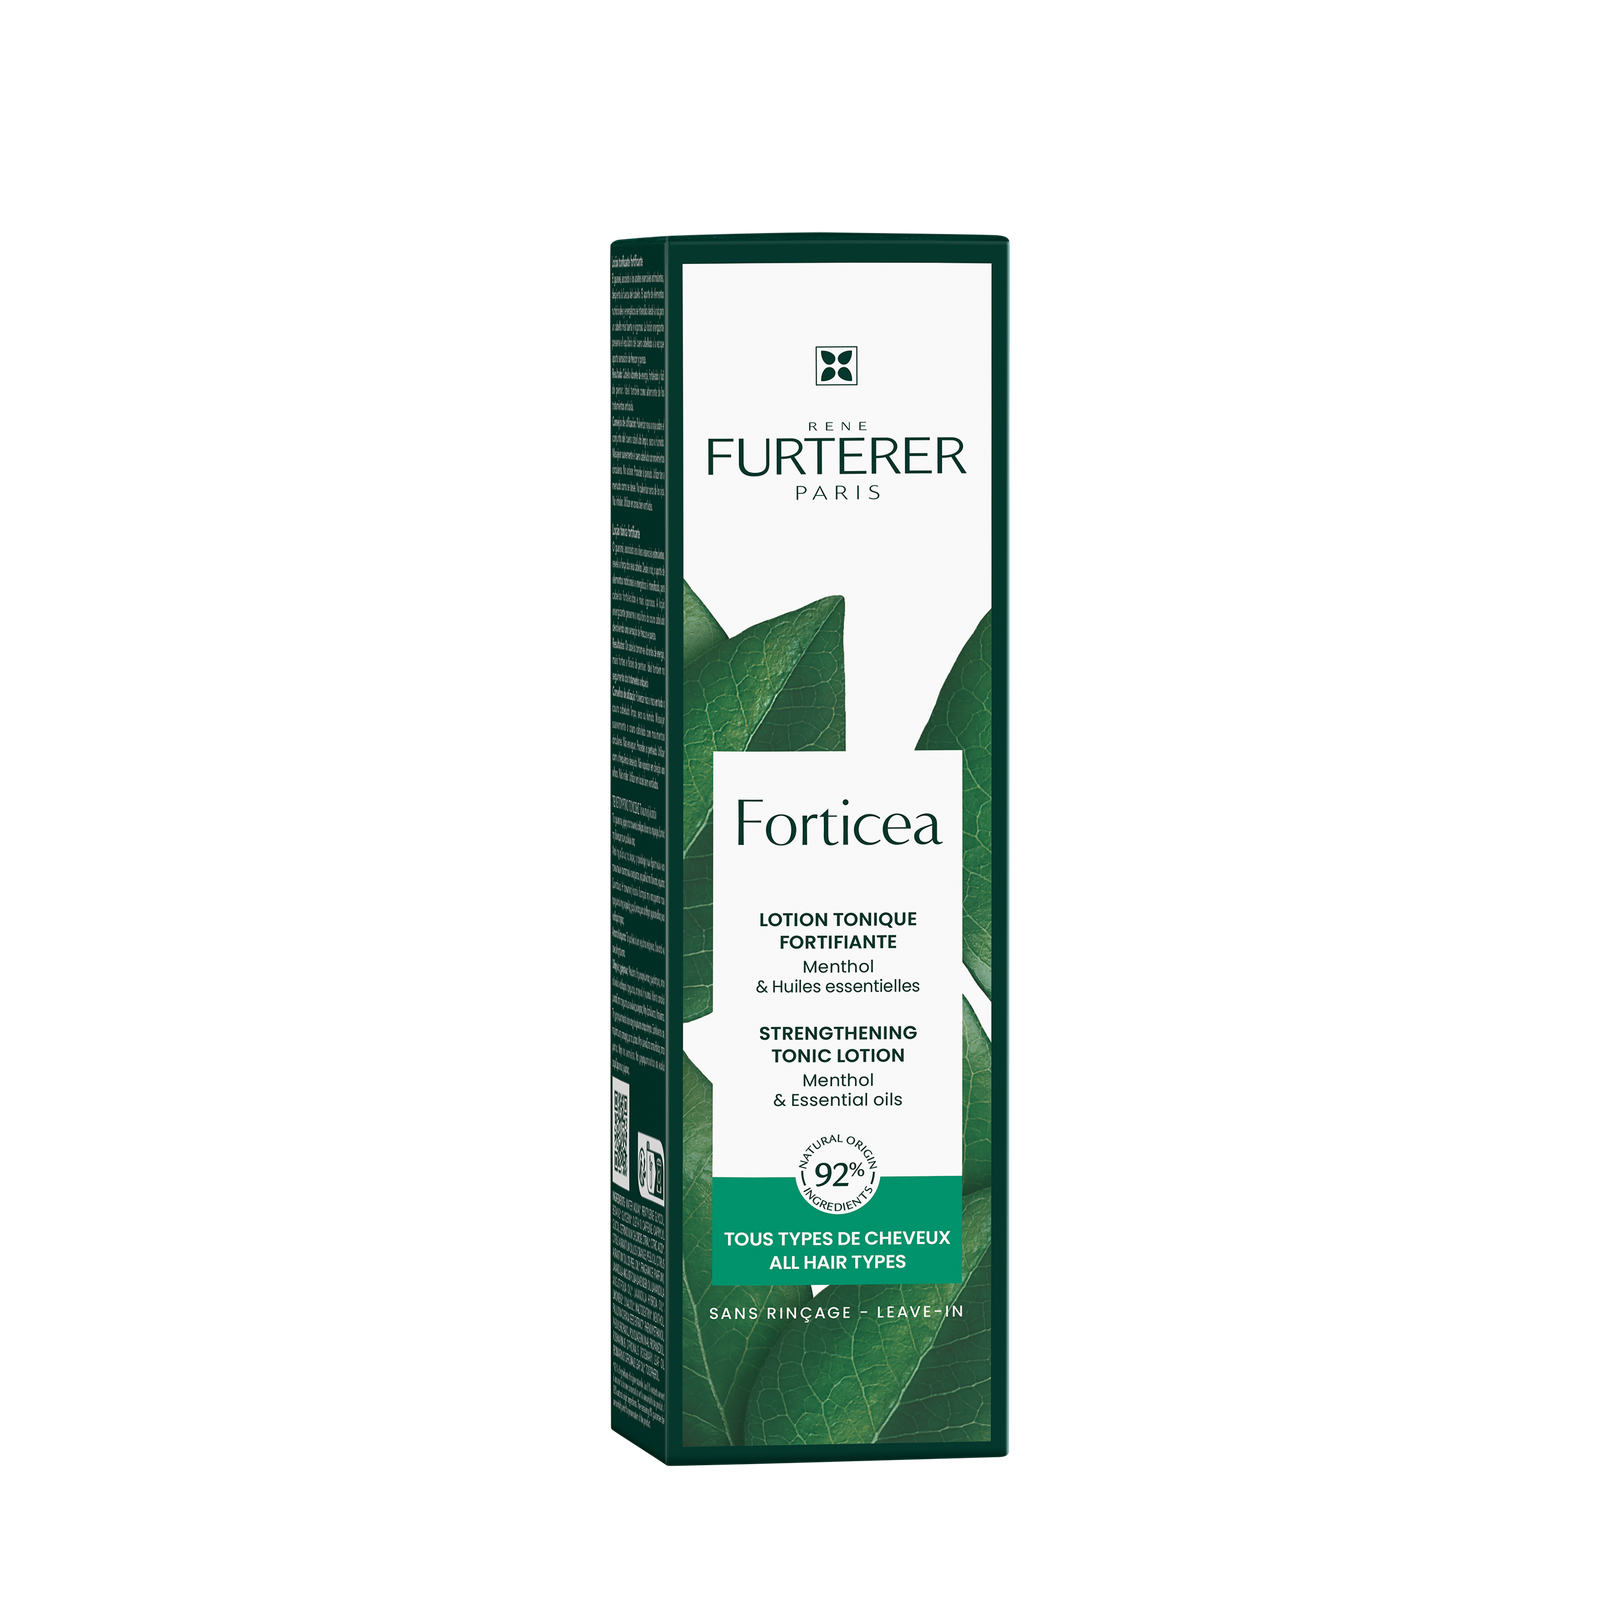 Strengthening tonic Lotion - Menthol & Essential oils | René Furterer